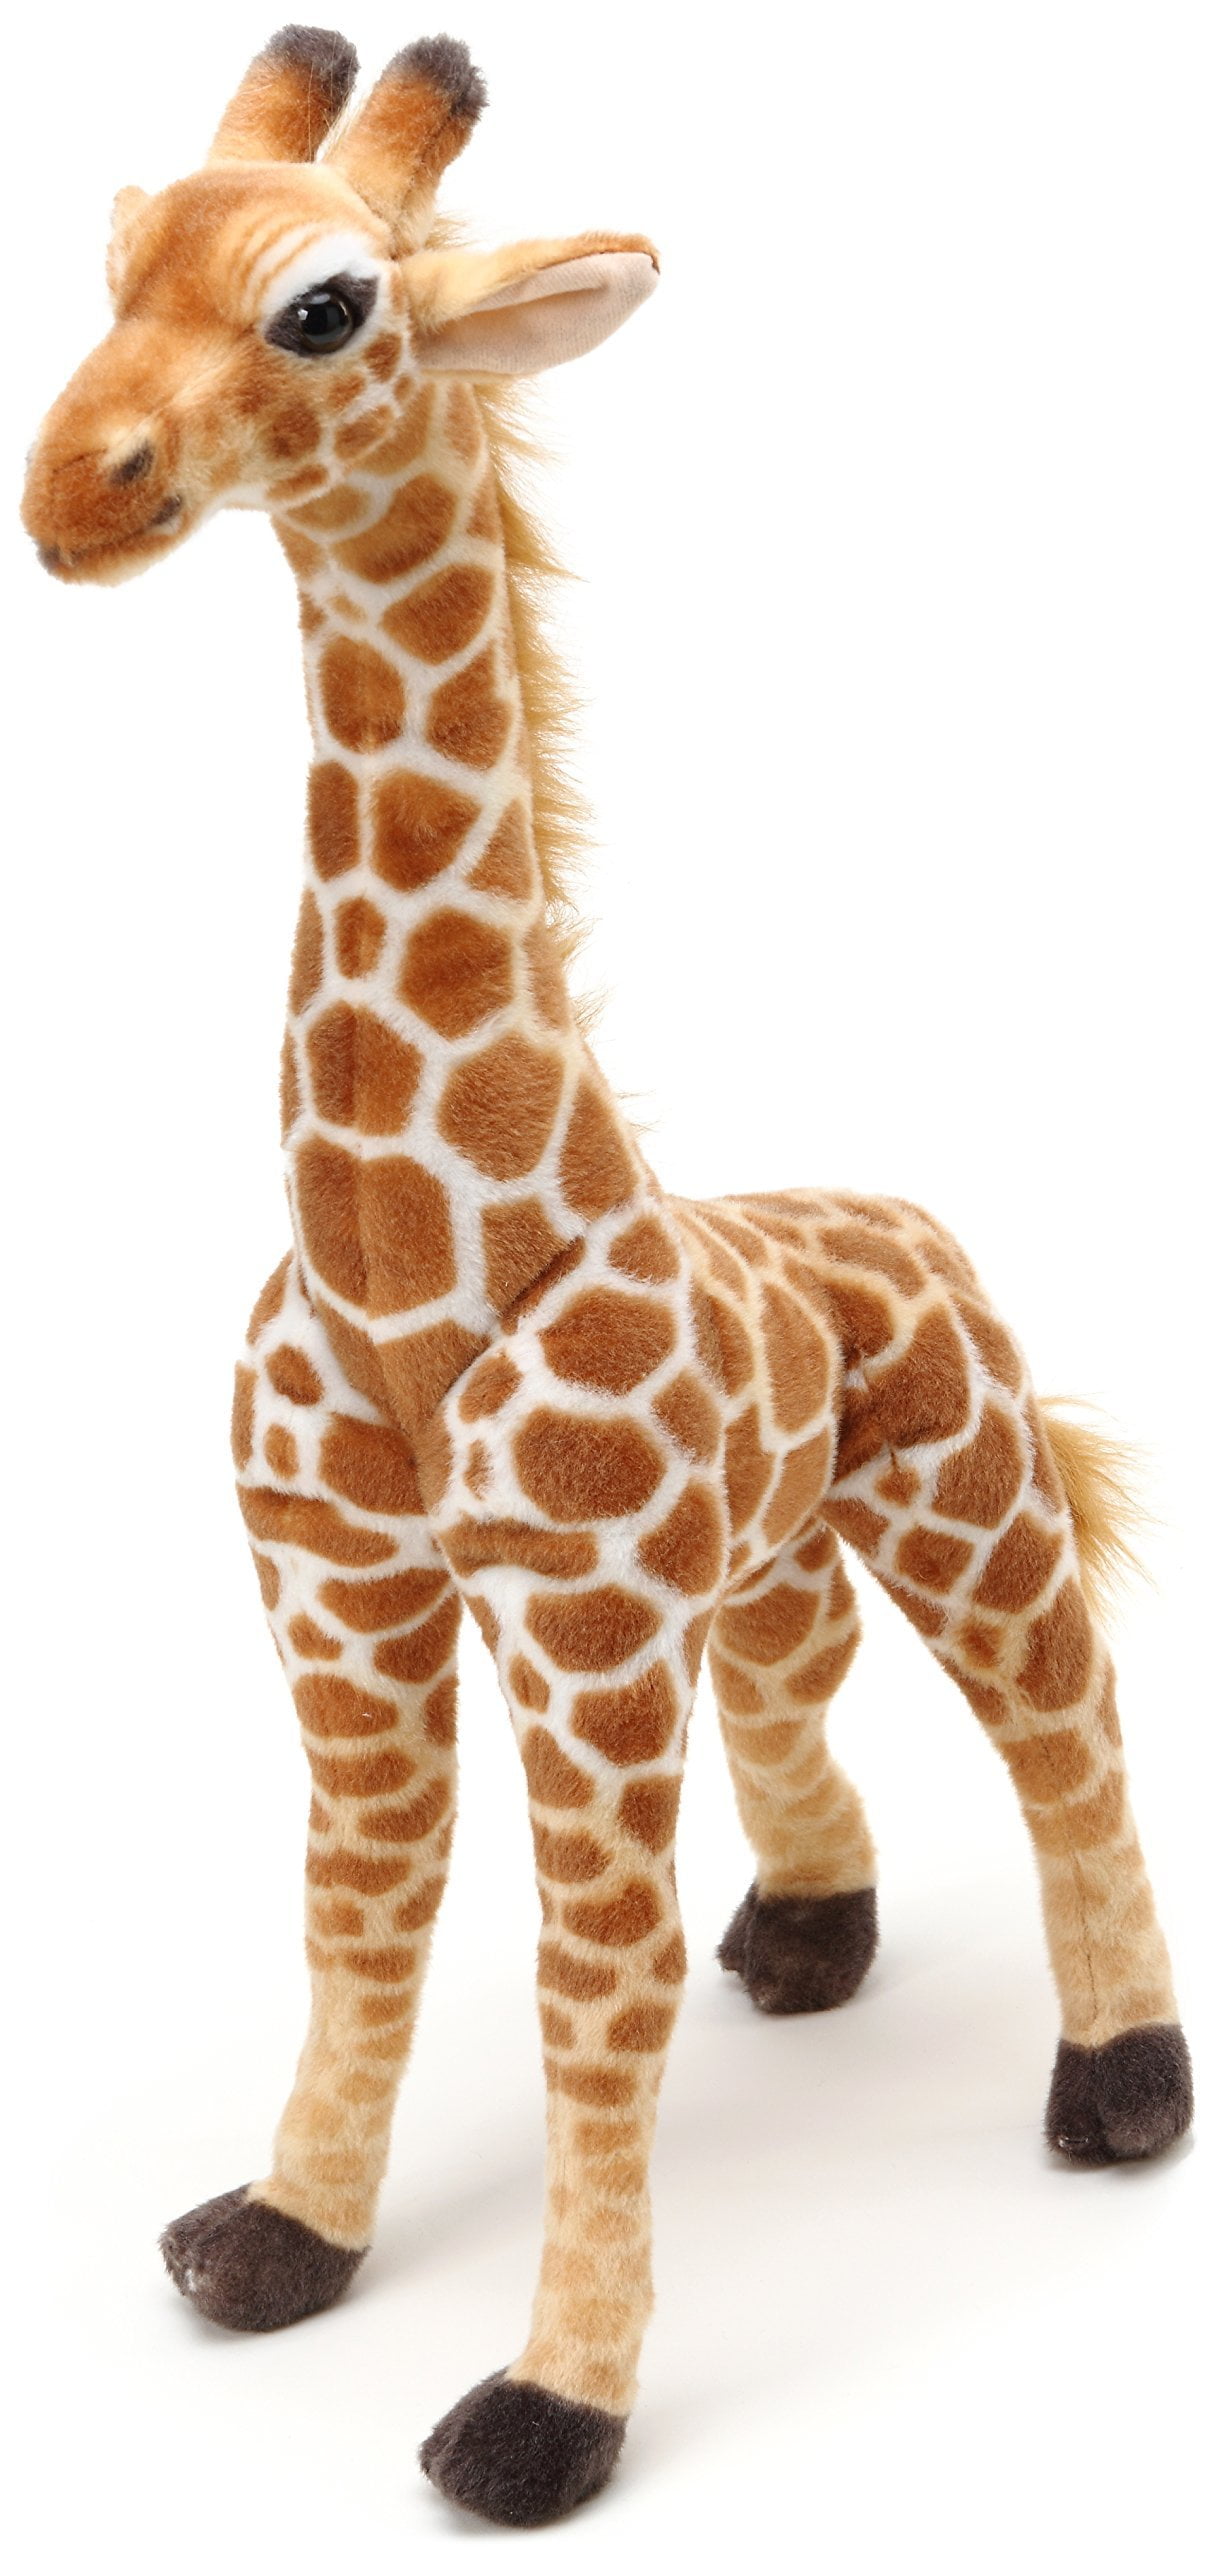 Giraffe Small Aurora Plush Stuffed Animal Toy Cute Cuddly 9 Inches Long Neck 